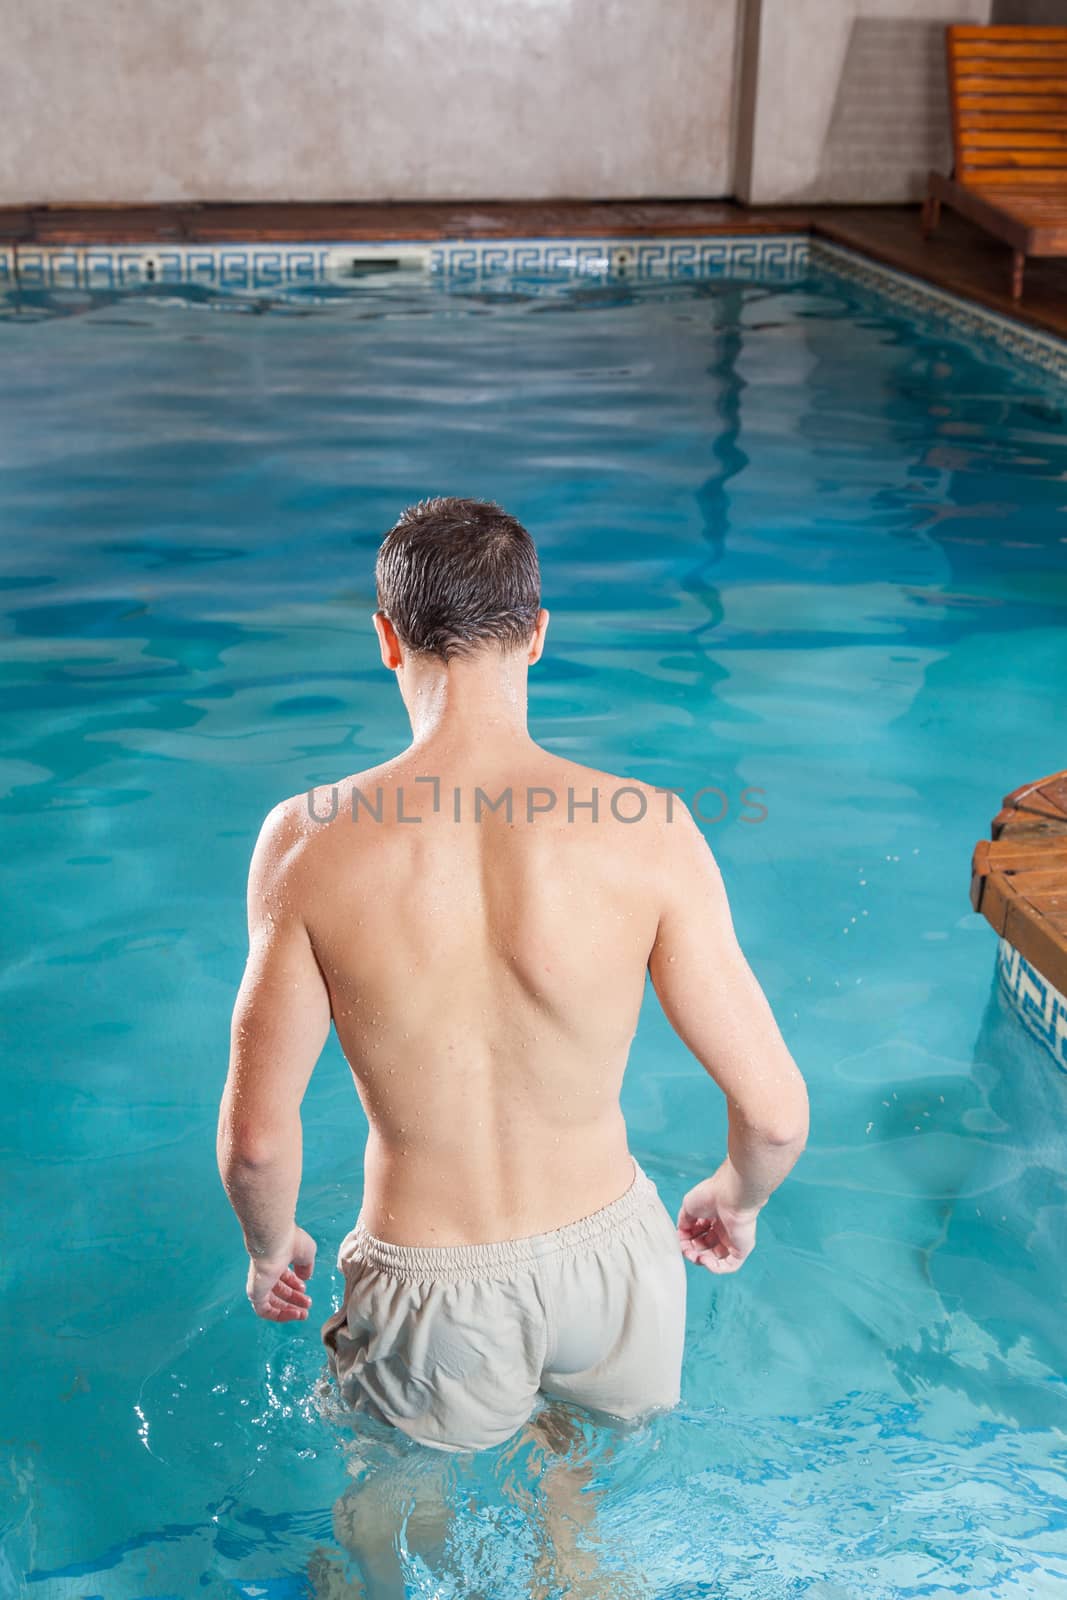 Man back enter the pool